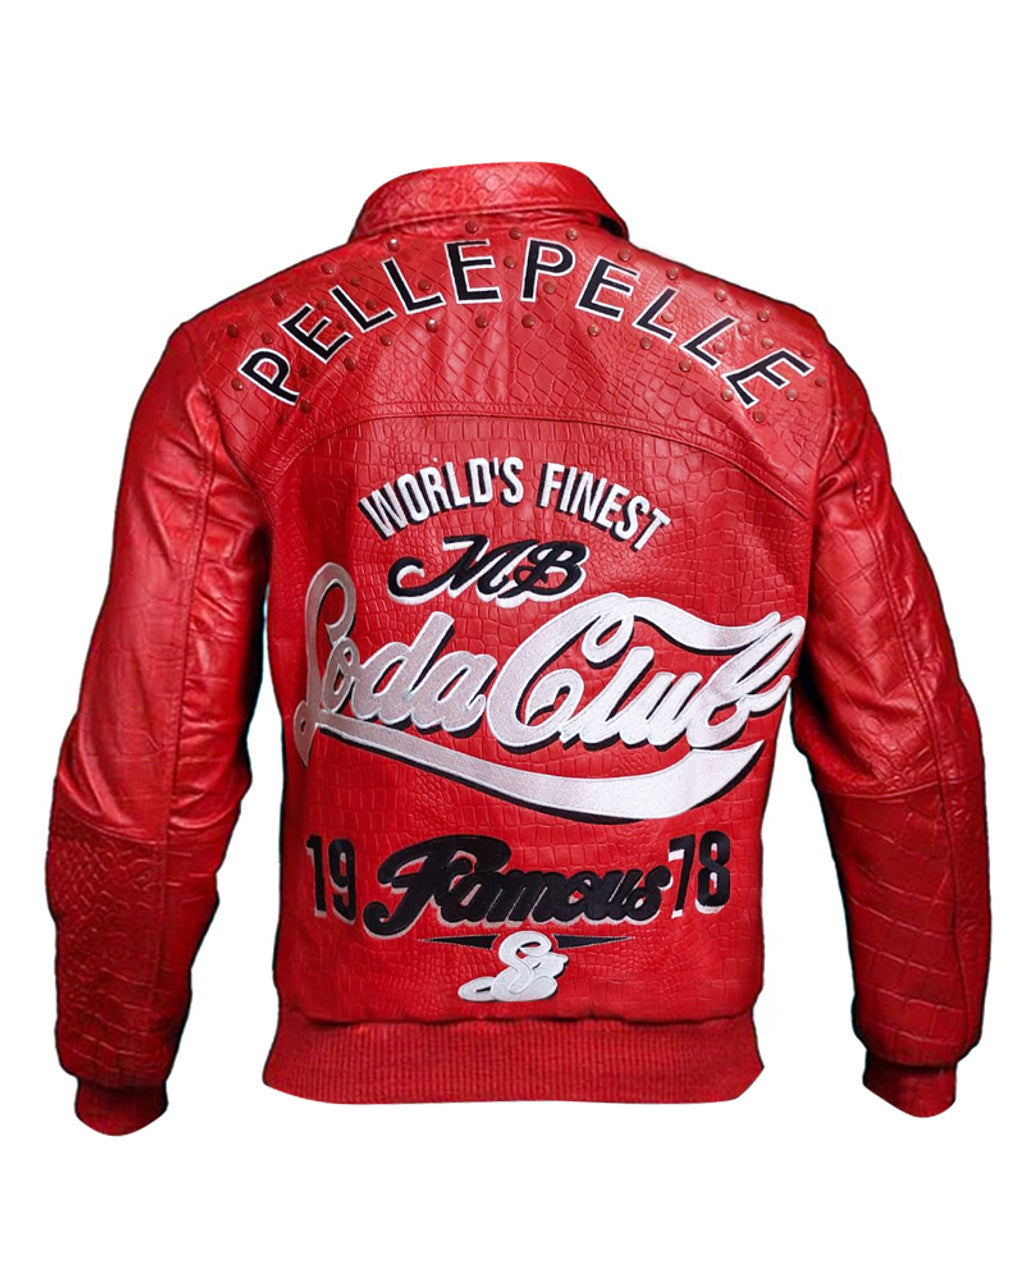 Pelle Pelle Soda Club Red Bomber Leather Jacket